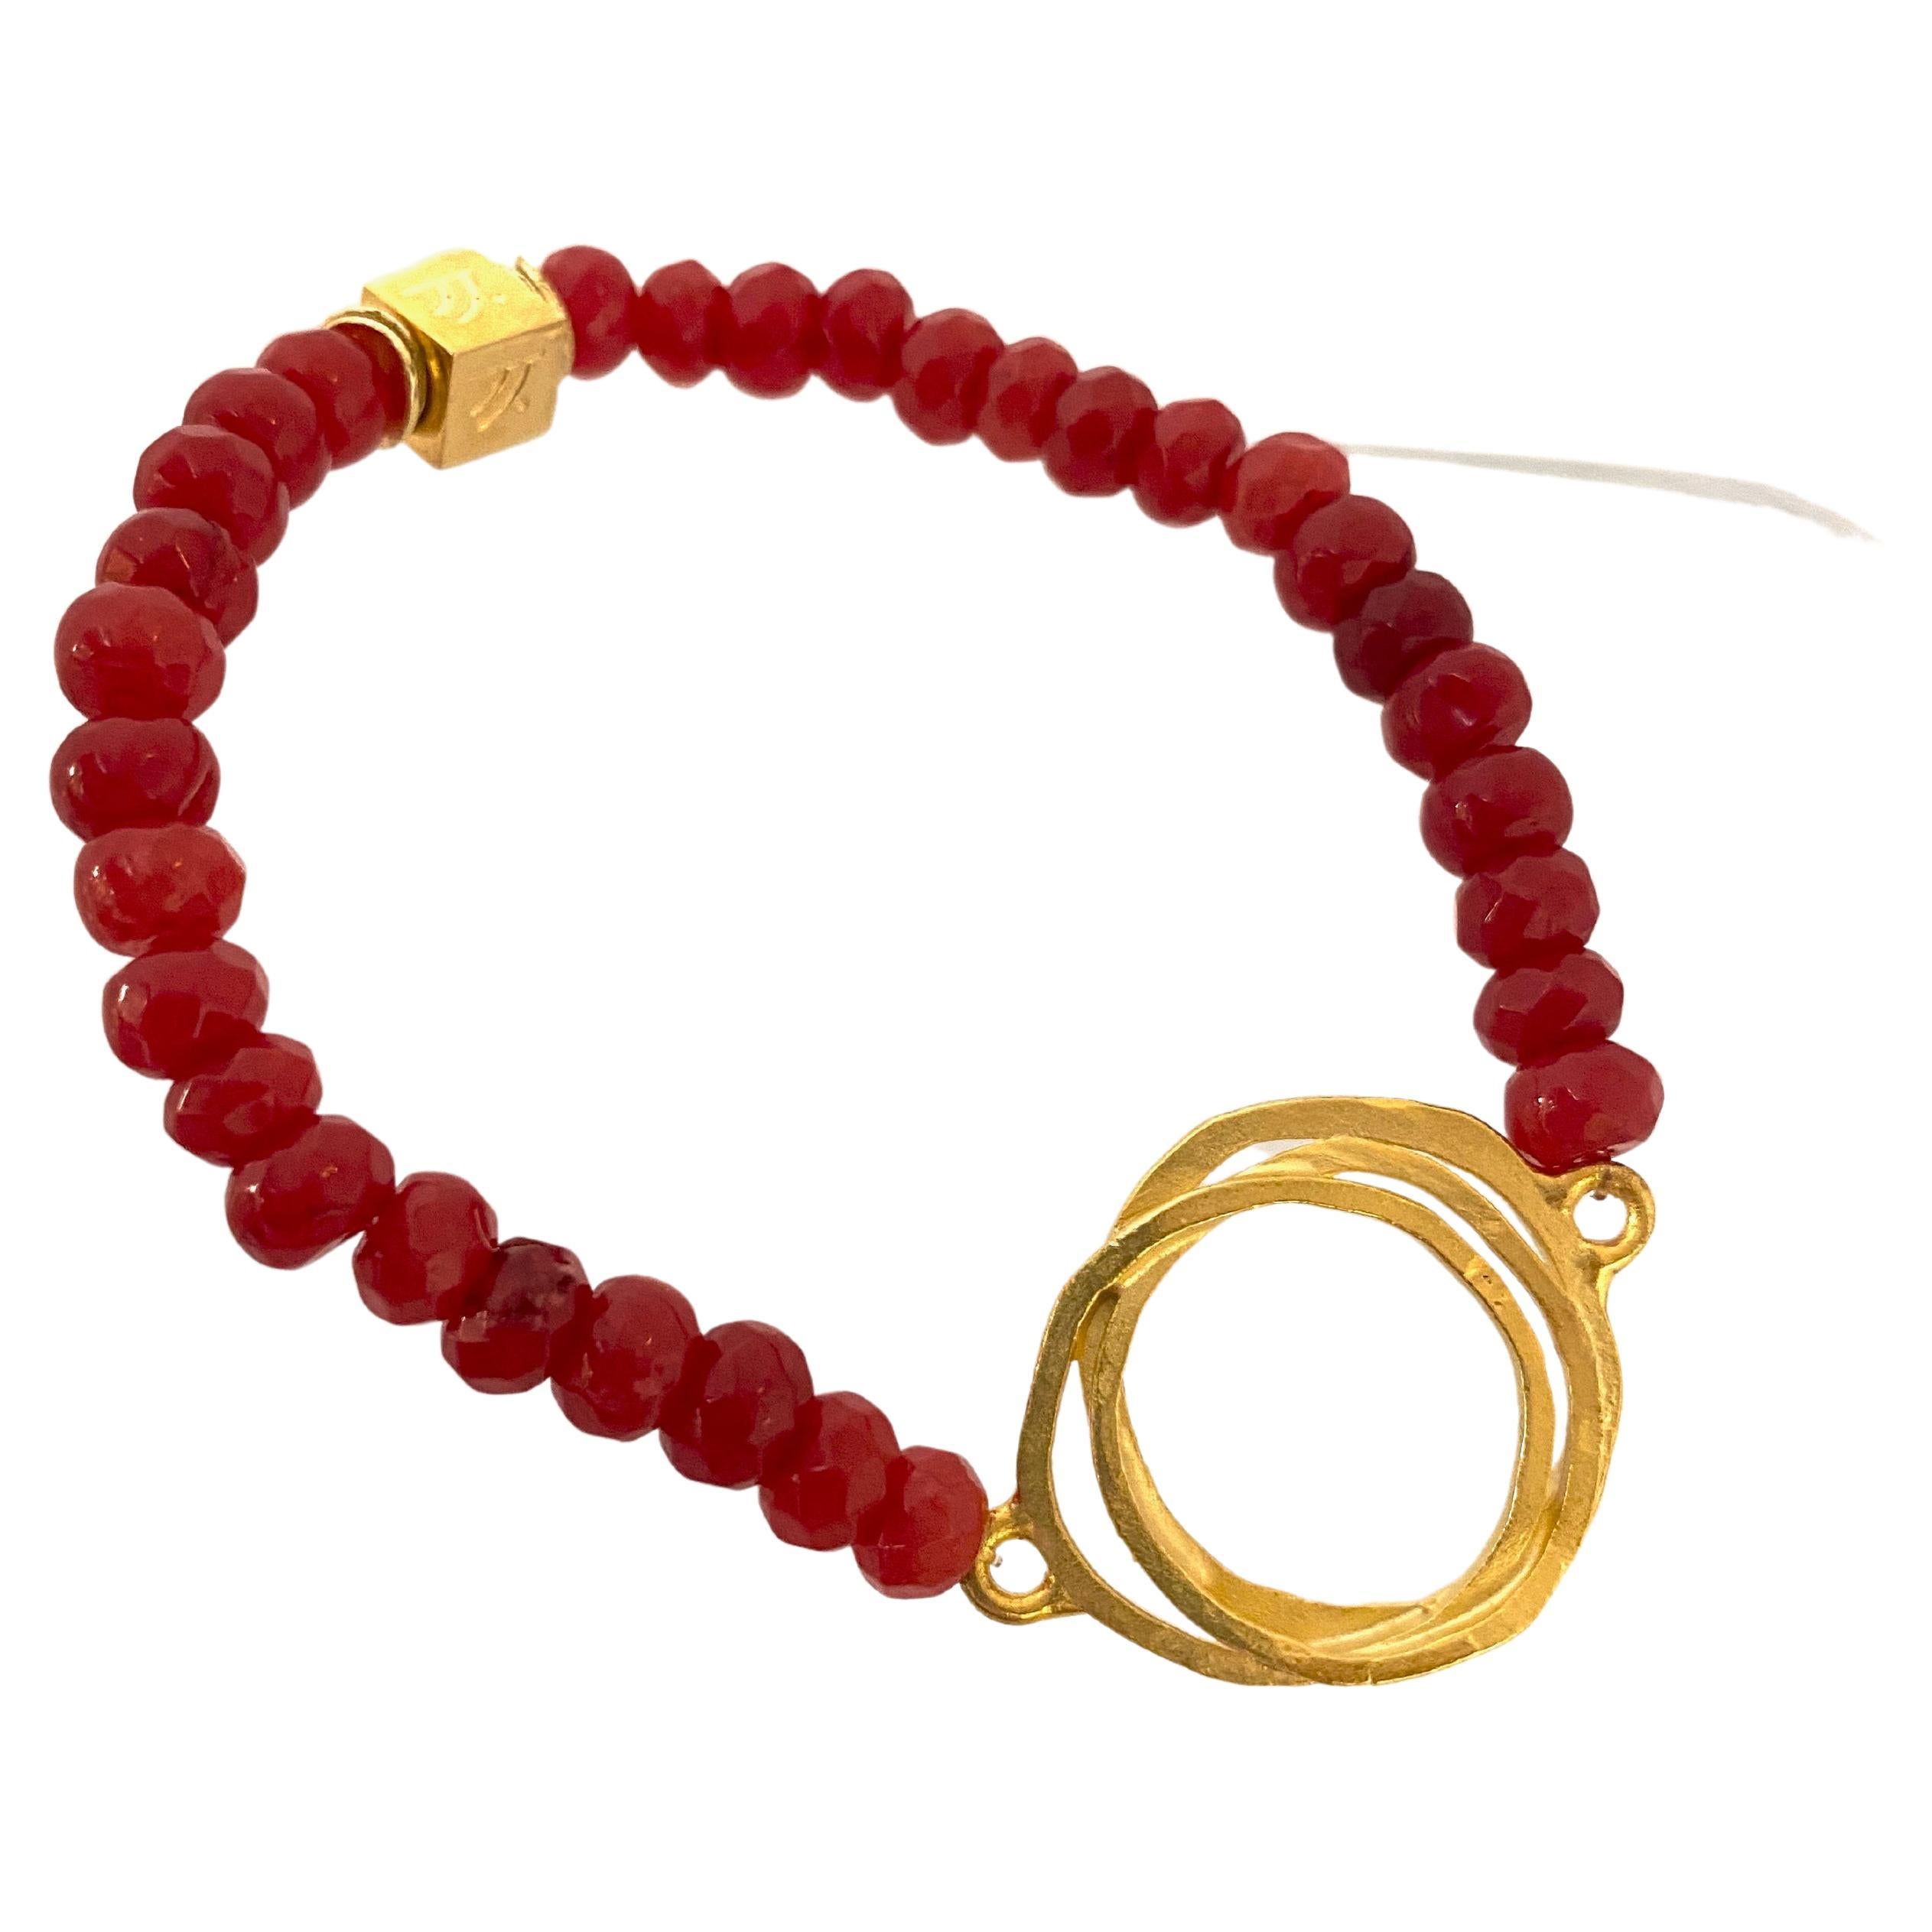 Details more than 77 red jade bracelet chinese super hot - ceg.edu.vn